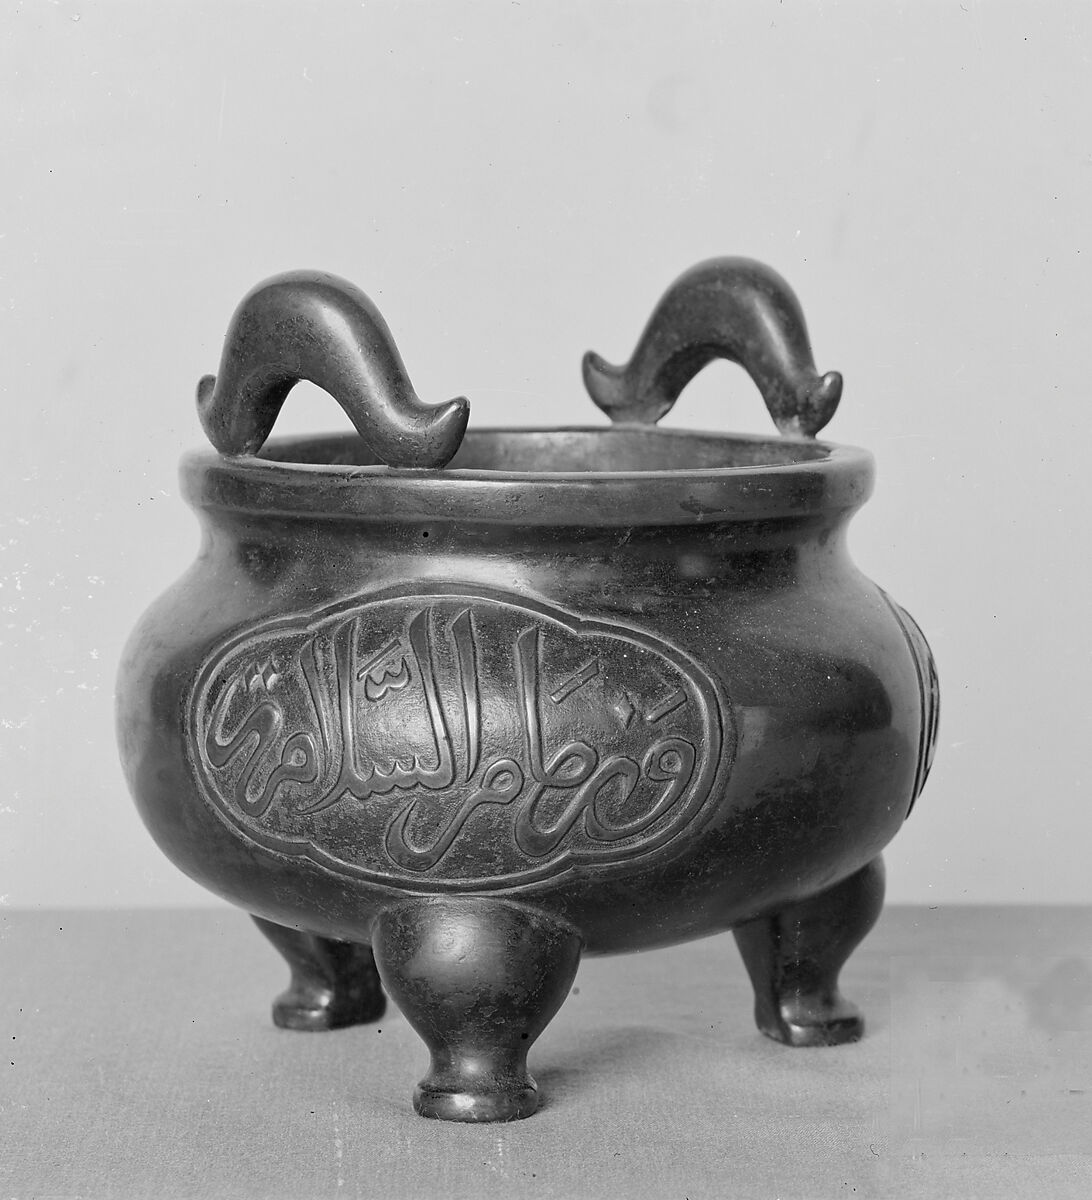 Incense burner with Arab inscription, Bronze, China 